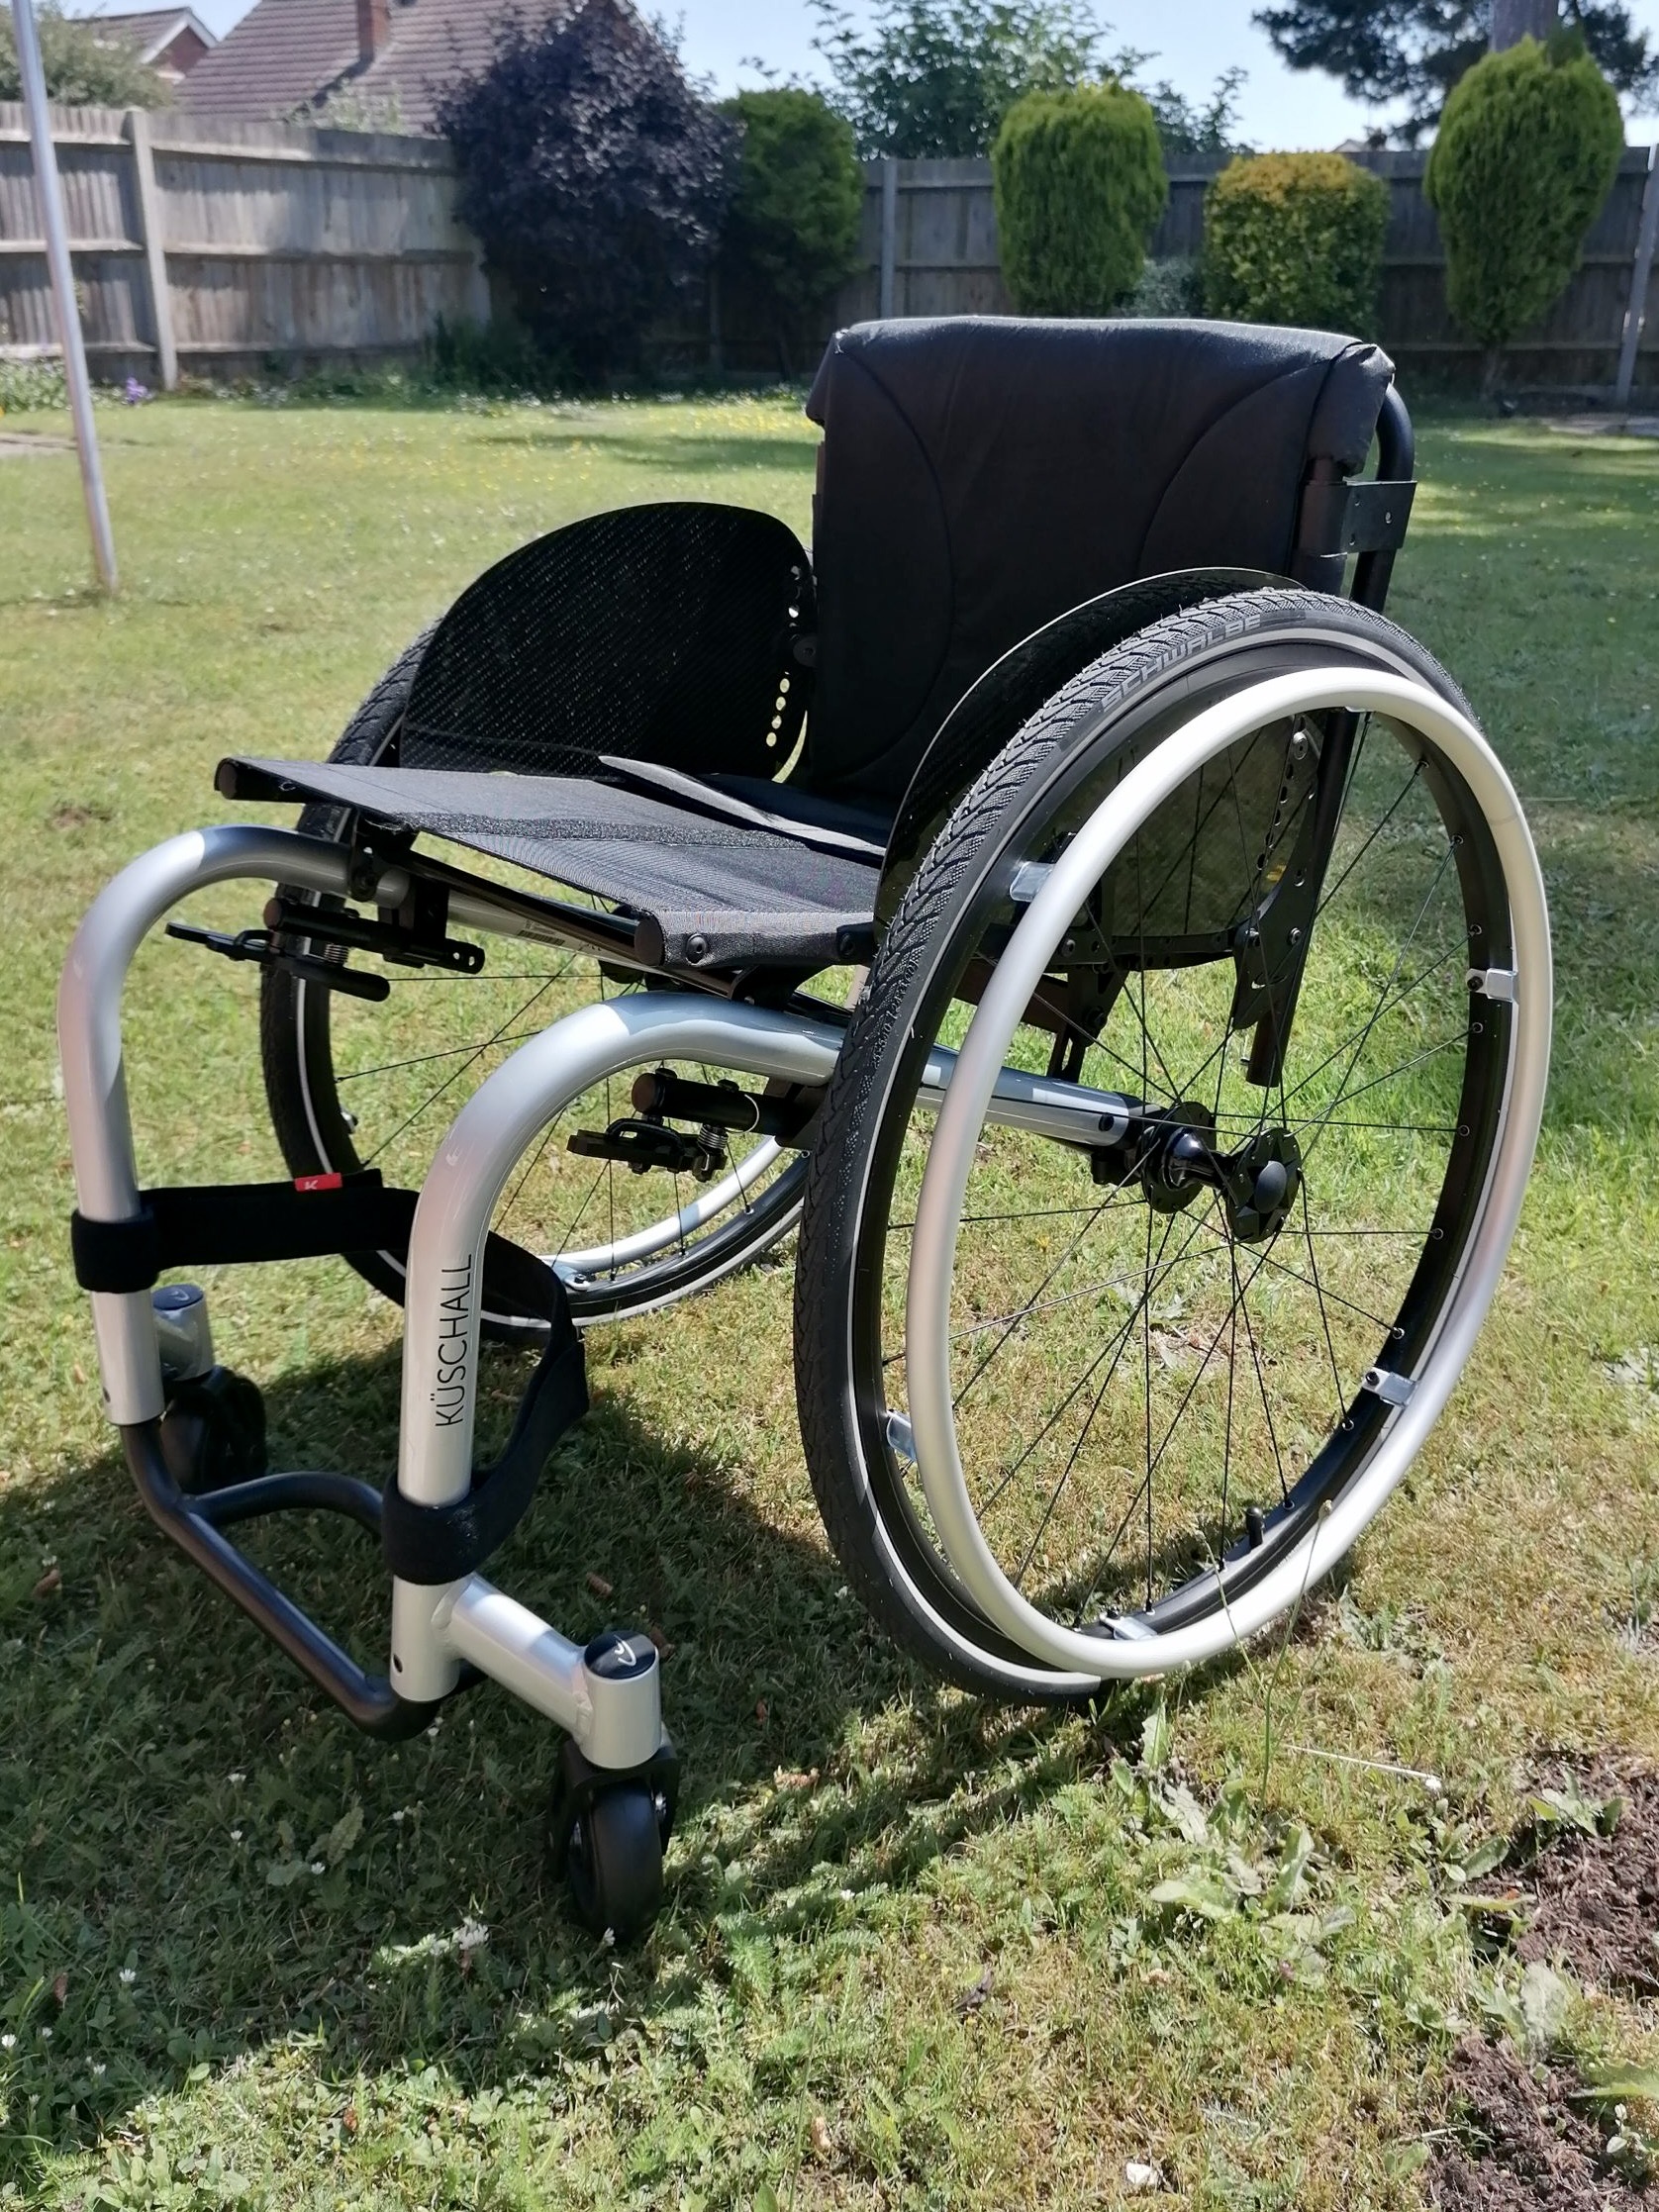 Kuschall K Series – Manual Wheelchair